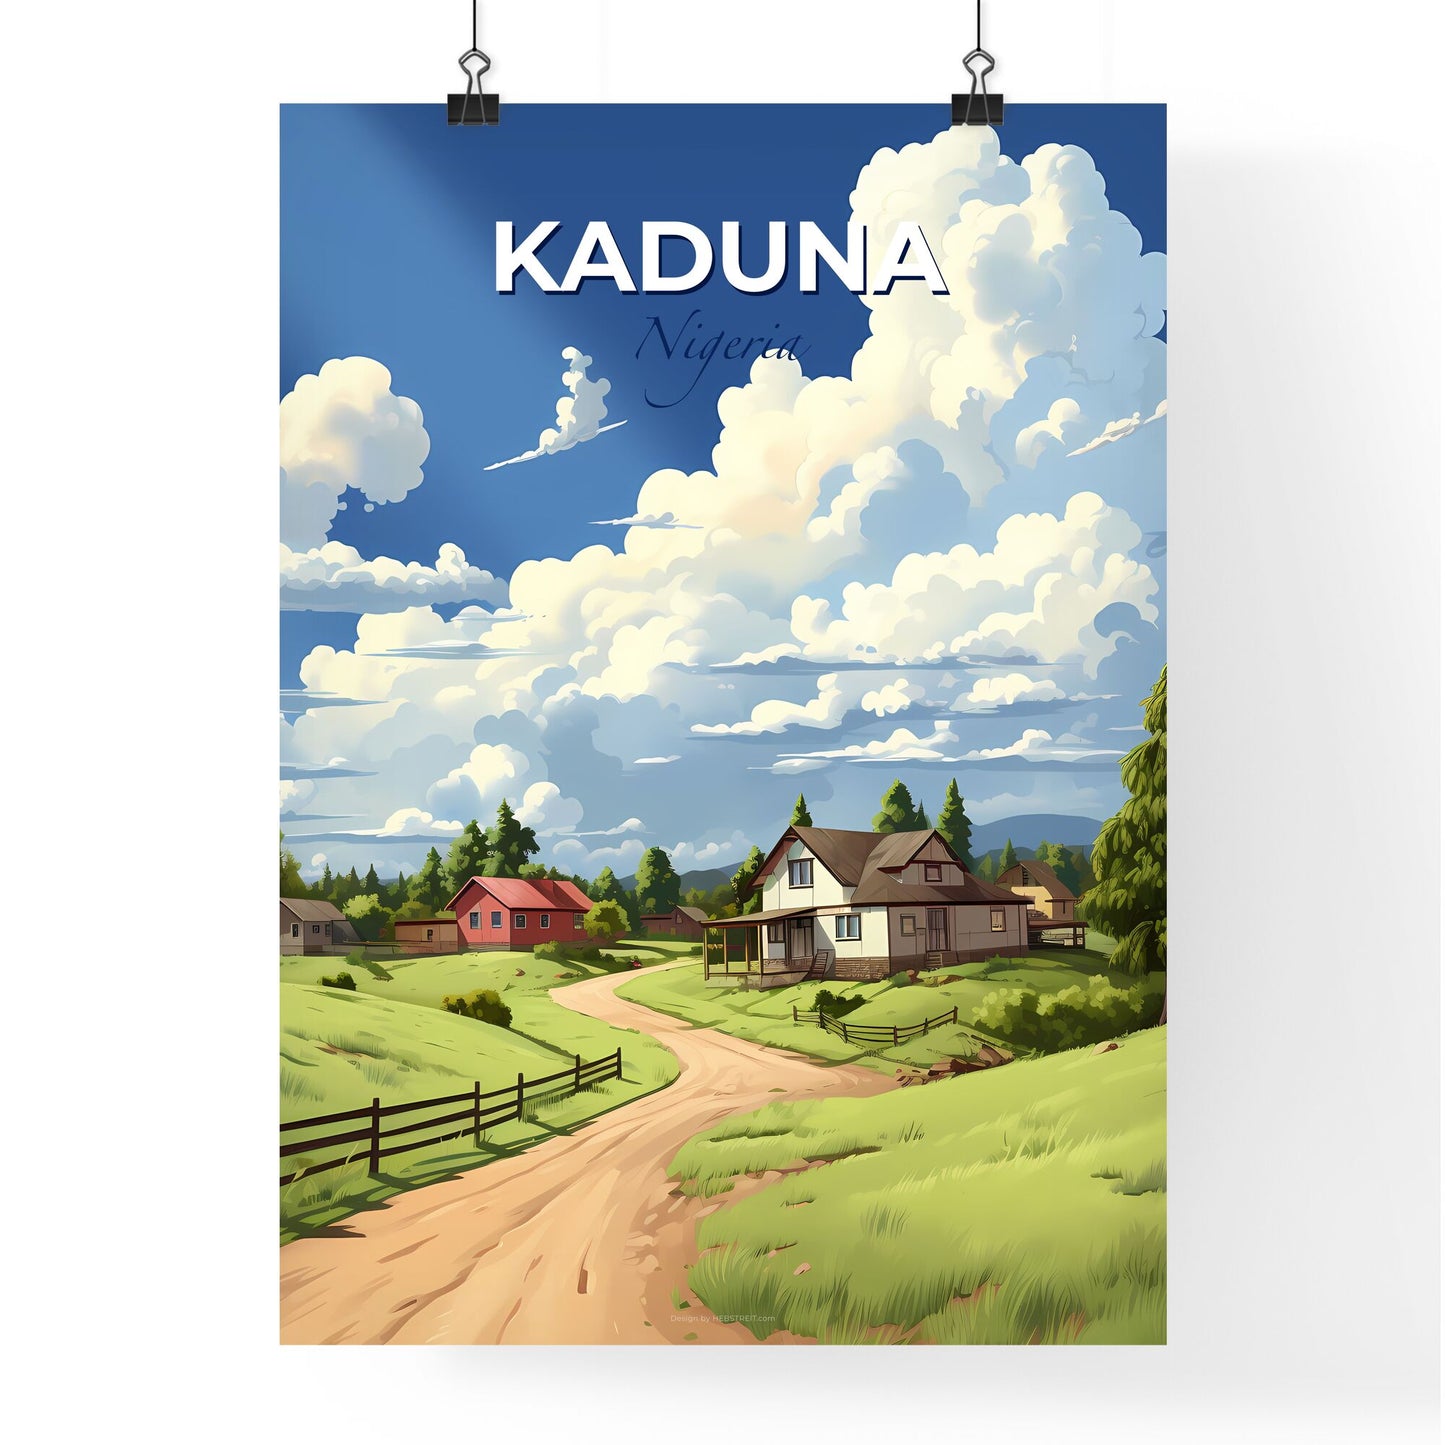 Vibrant Kaduna Nigeria Skyline Painting: Houses and Dirt Road Depicting Local Village Life Default Title